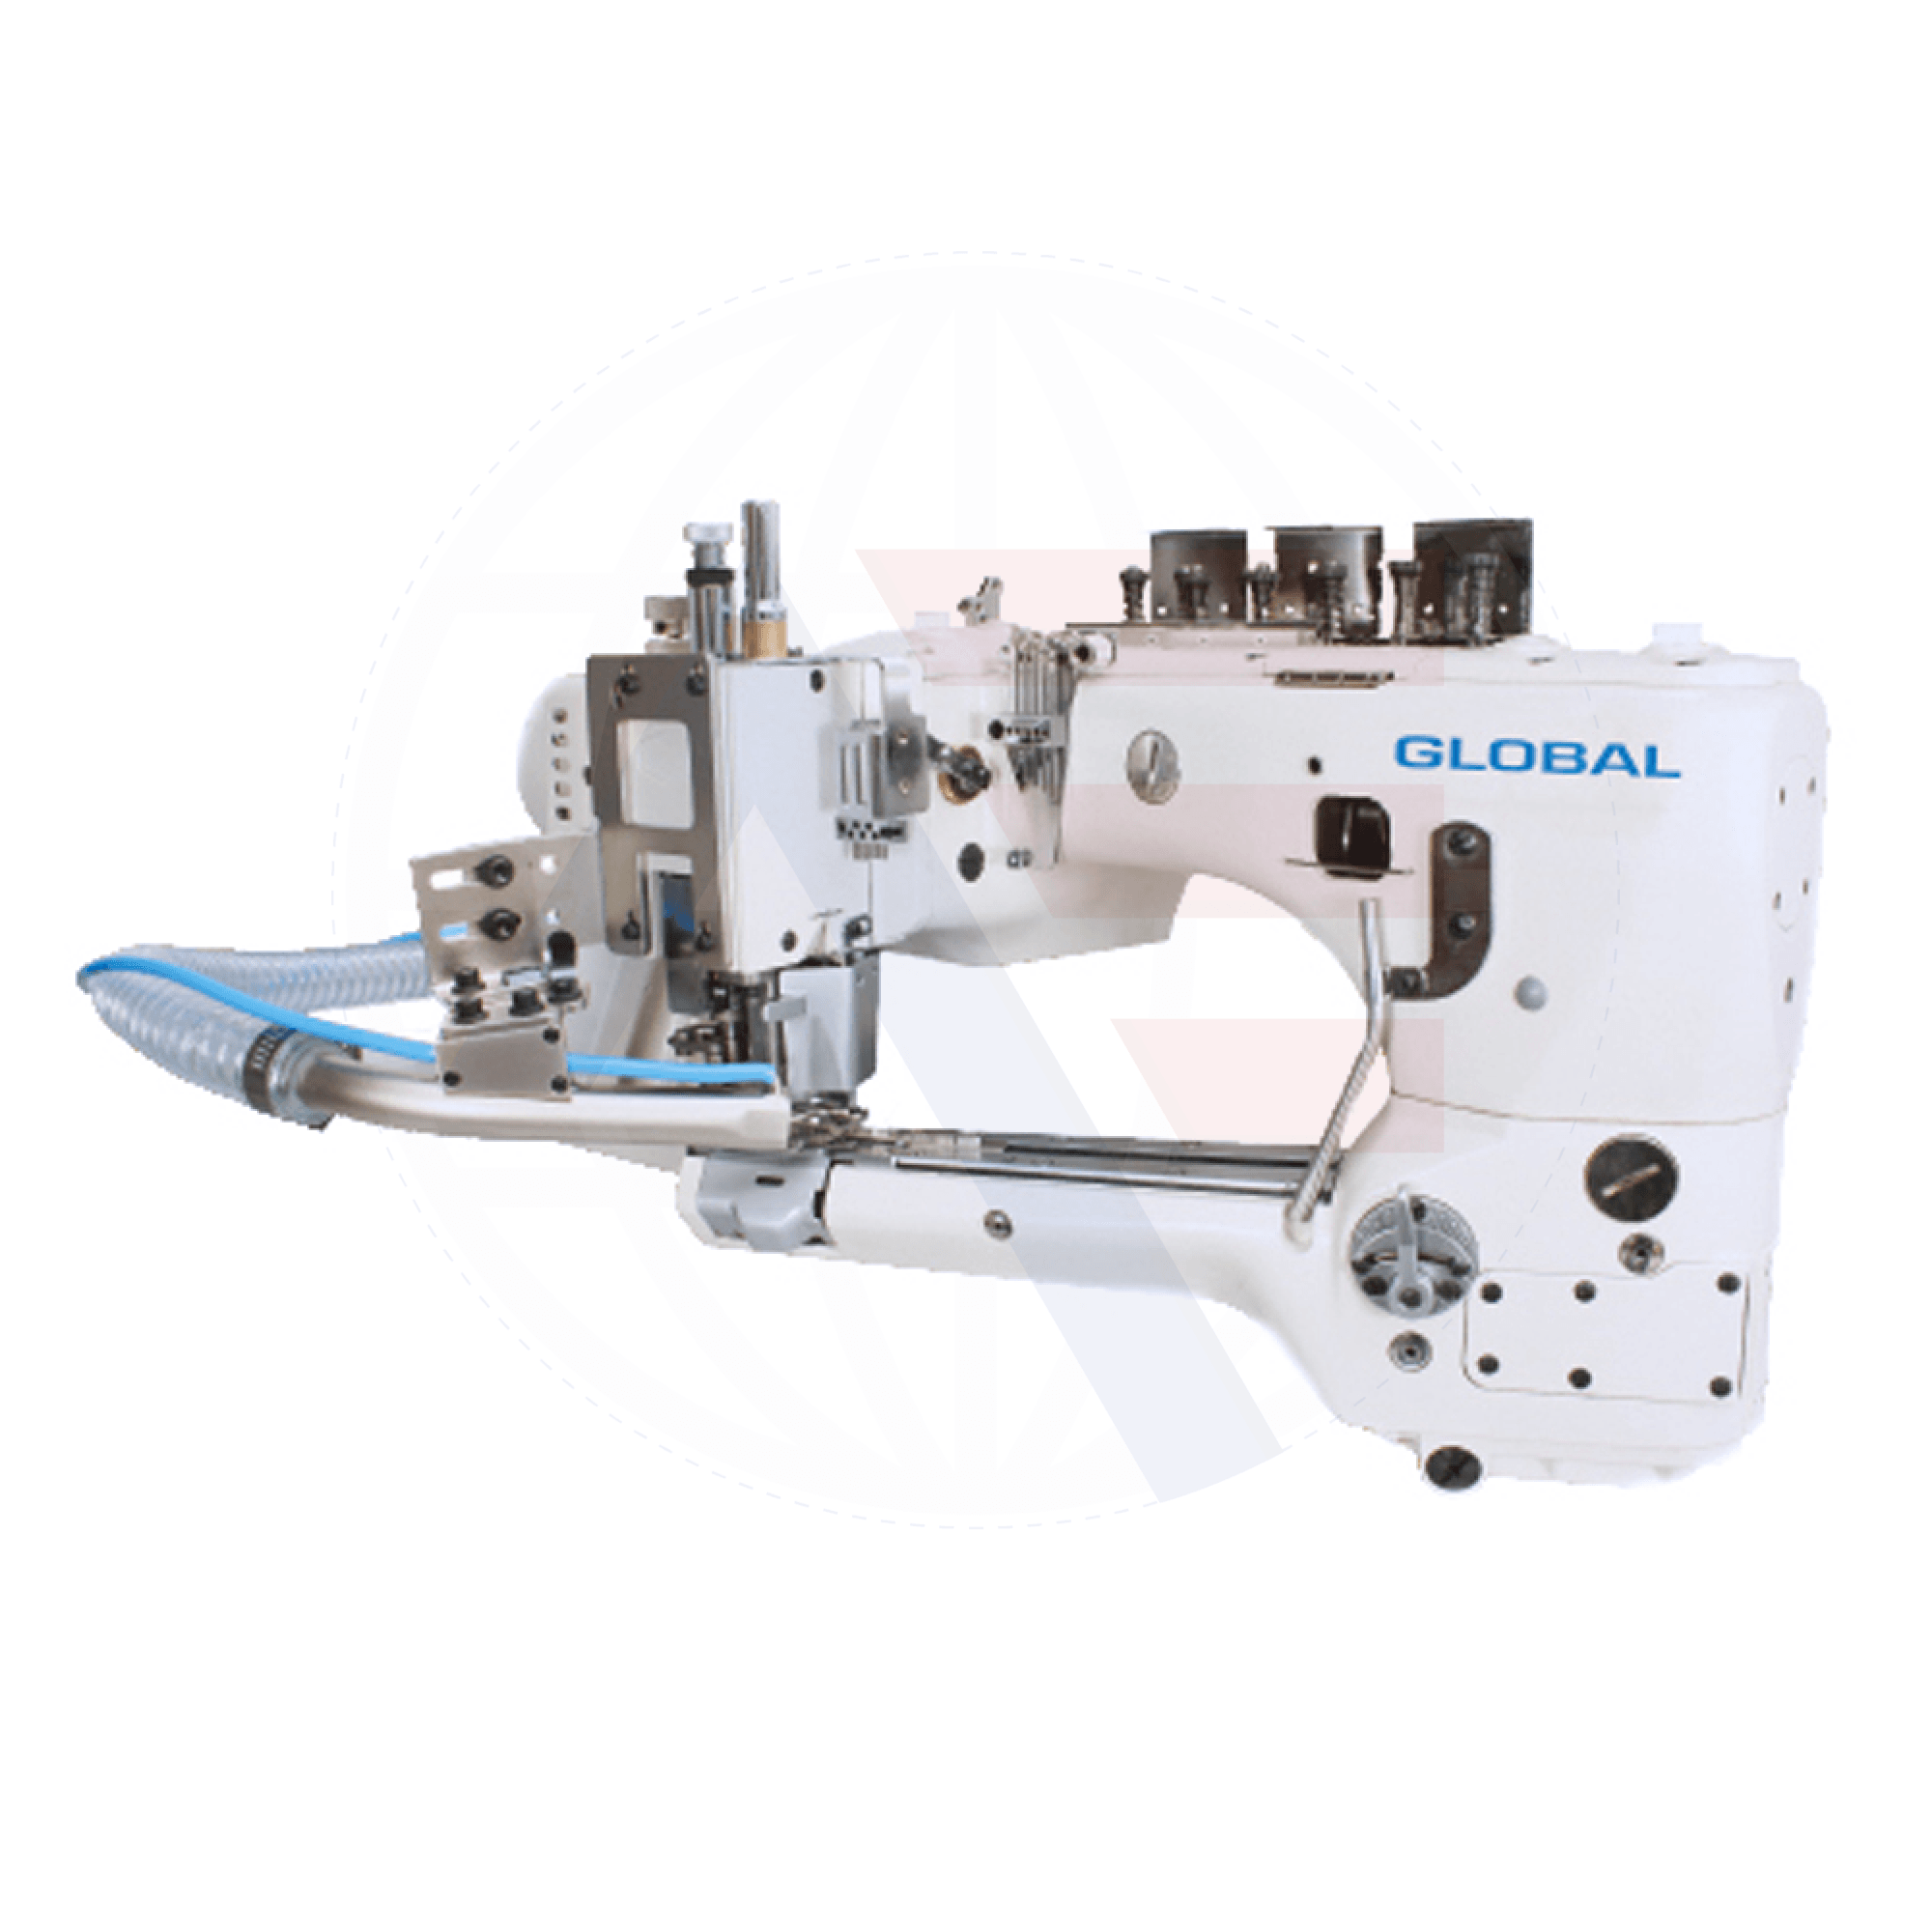 Global Fs 603 Series Flatlock Machine Sewing Machines